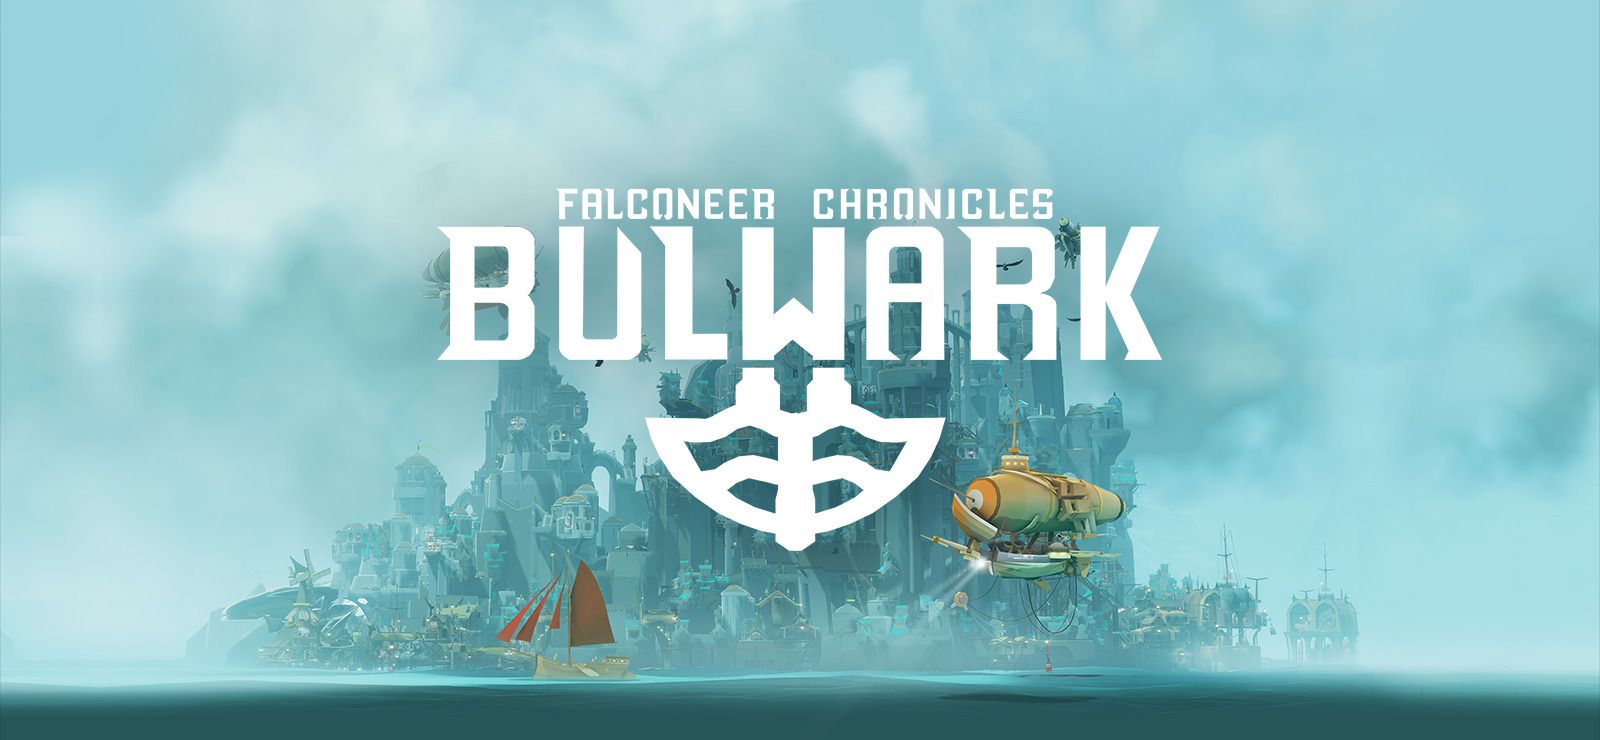 Bulwark: Falconeer Chronicles arriverà anche su console